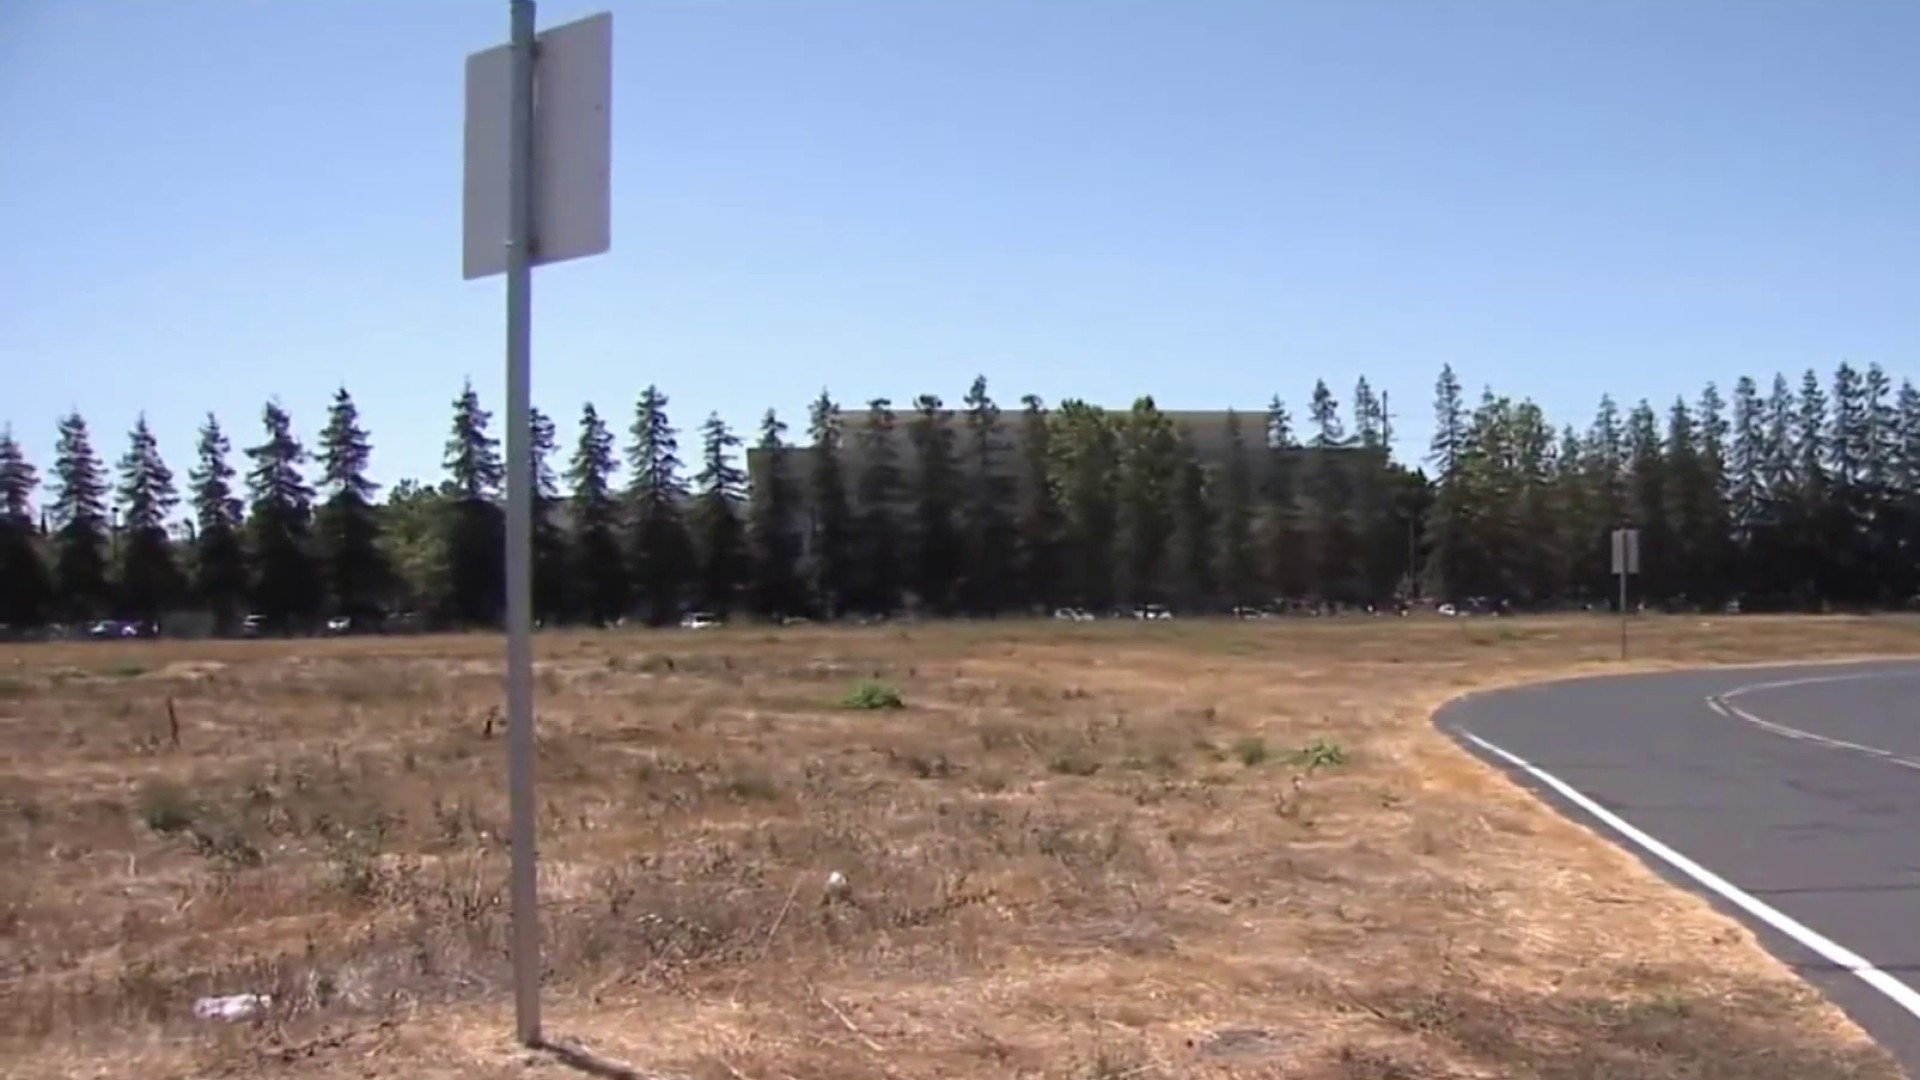 Mansion proposal obstructs Santa Clara Valley ridgeline - San José Spotlight